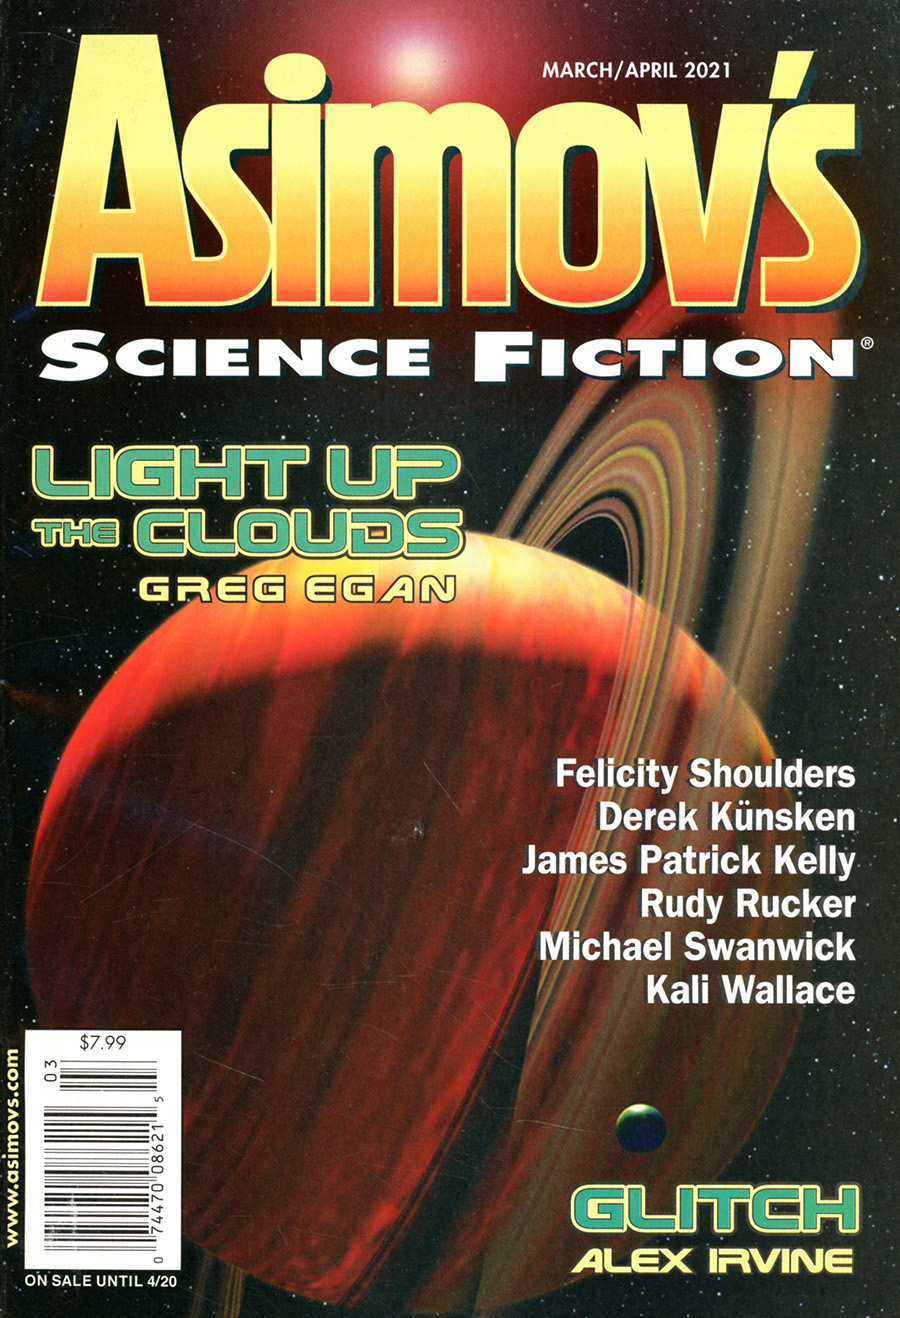 Asimovs Science Fiction Vol 45 #03 & 04 March / April 2021